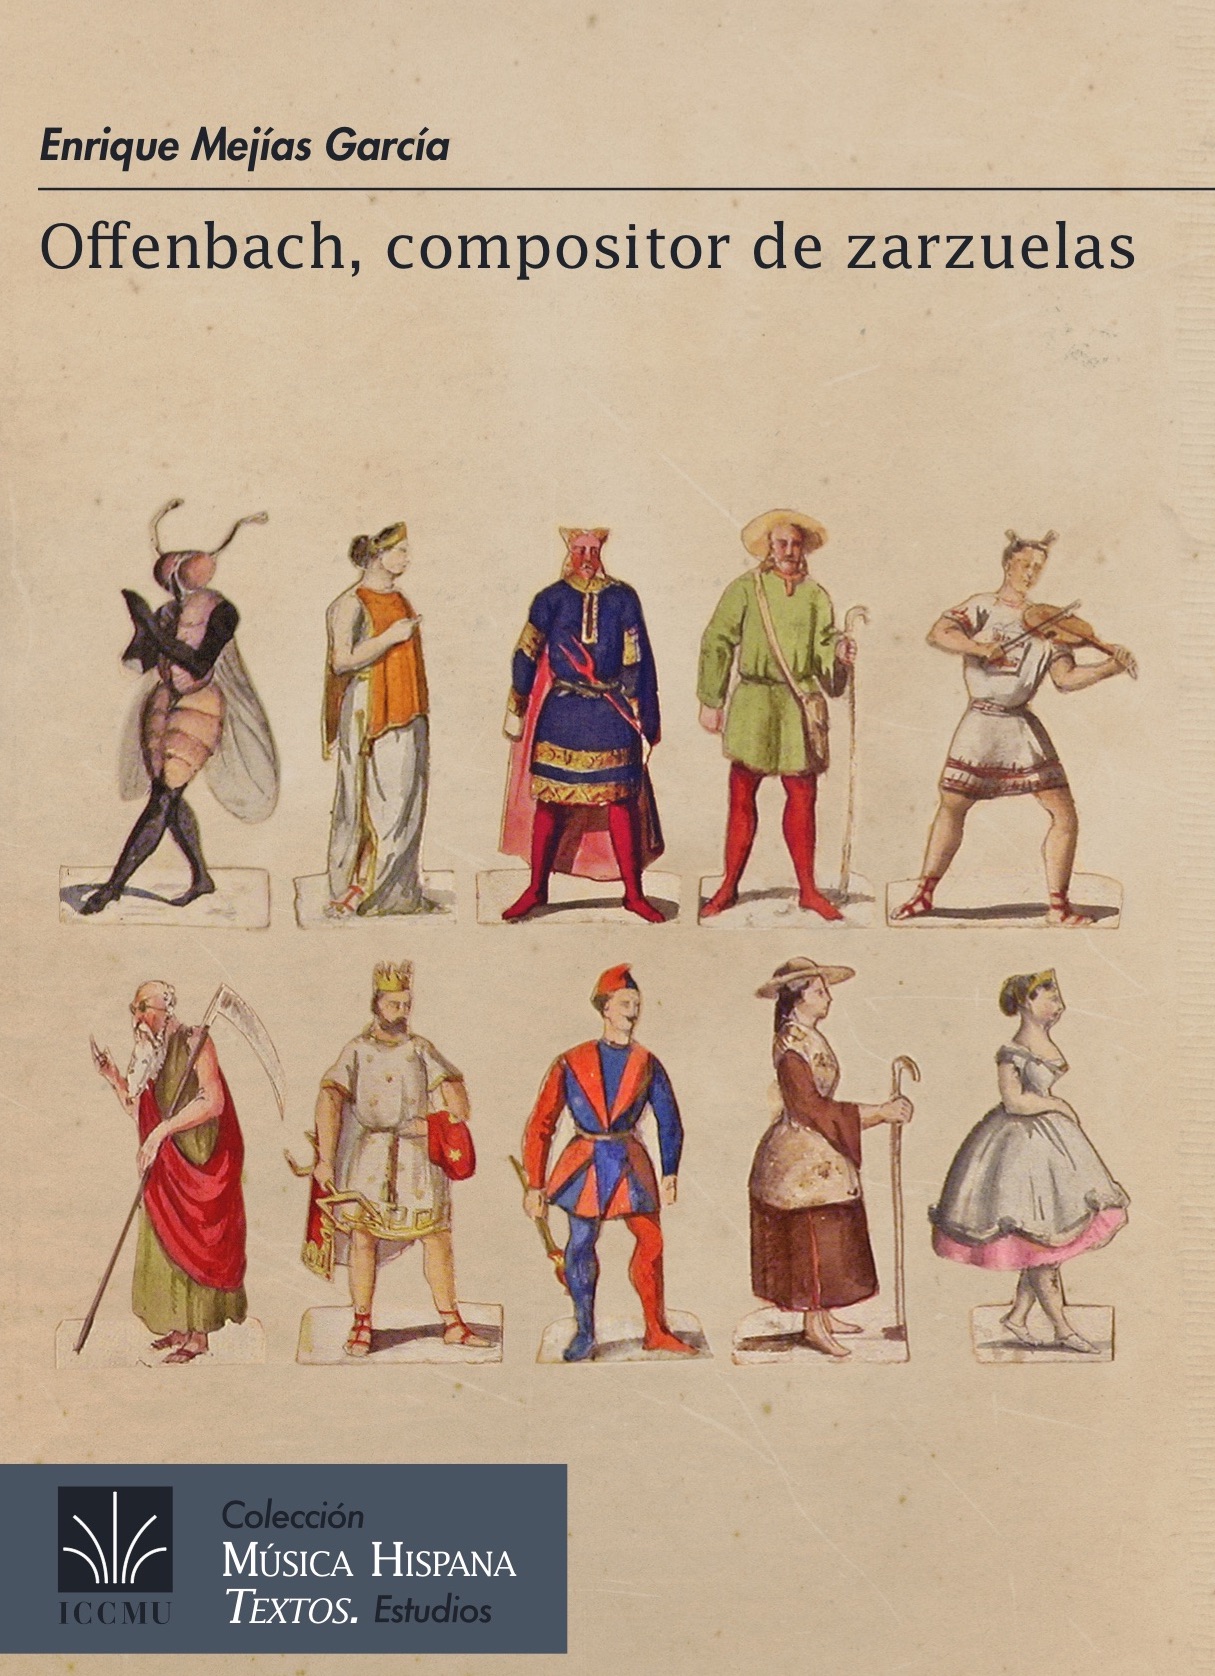 The book "Enrique Mejías García’s “Offenbach, compositor de zarzuelas.” (Photo: Instituto Complutense de Ciencias Musicales)